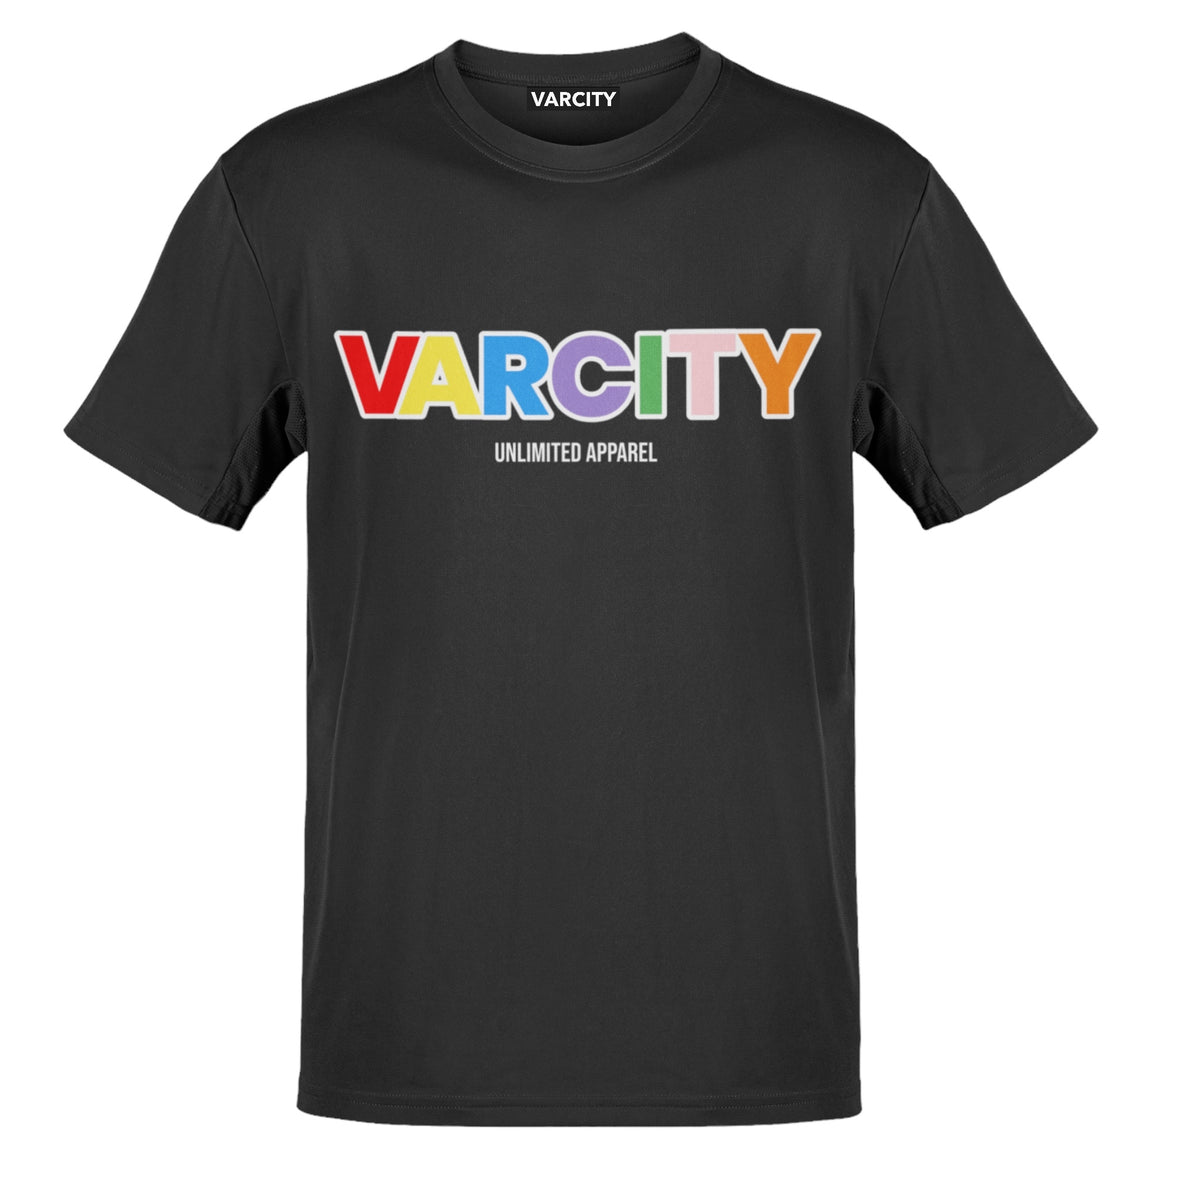 Varcity Unlimited Apparel Statement T Shirt Black